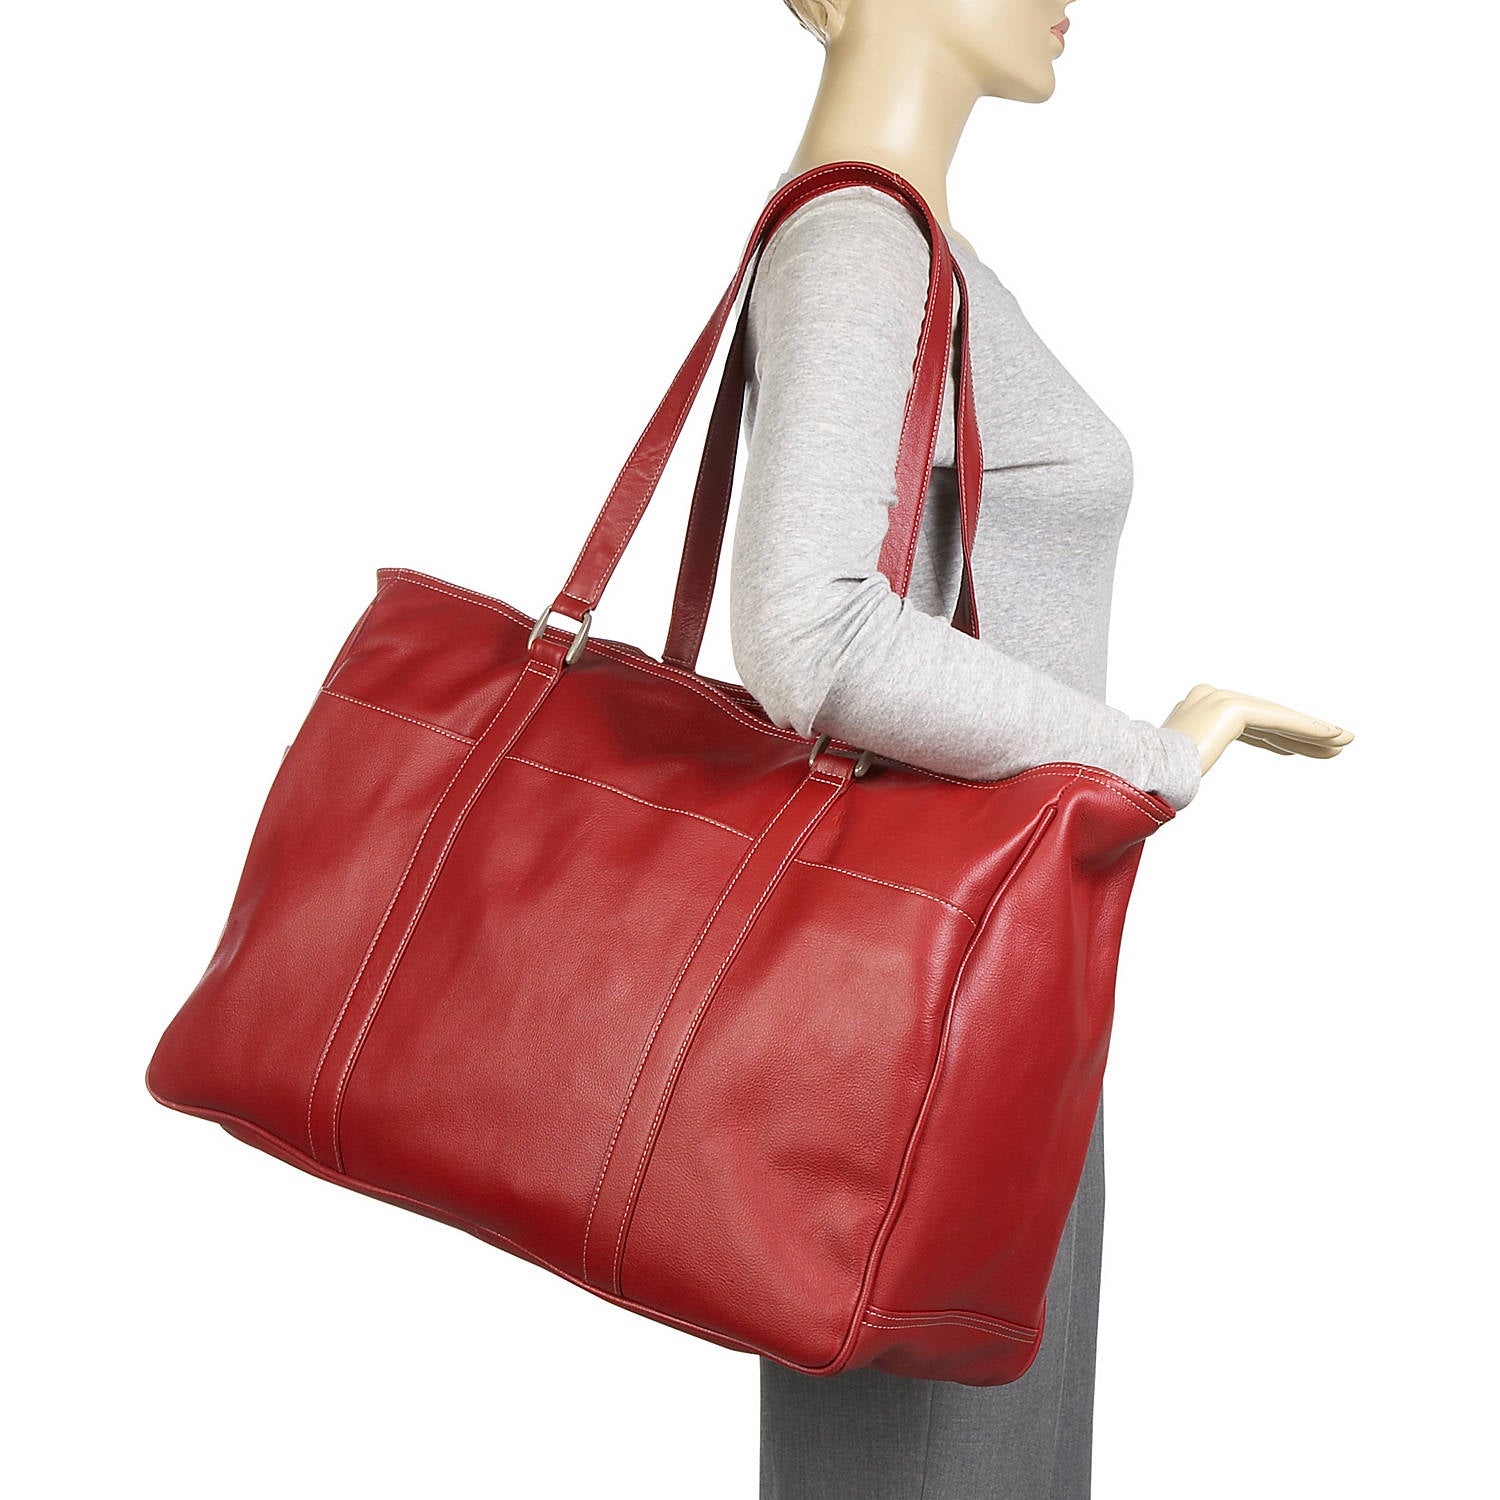 Bag model Pico, in cream leather 15 x 17 cm Good condi…